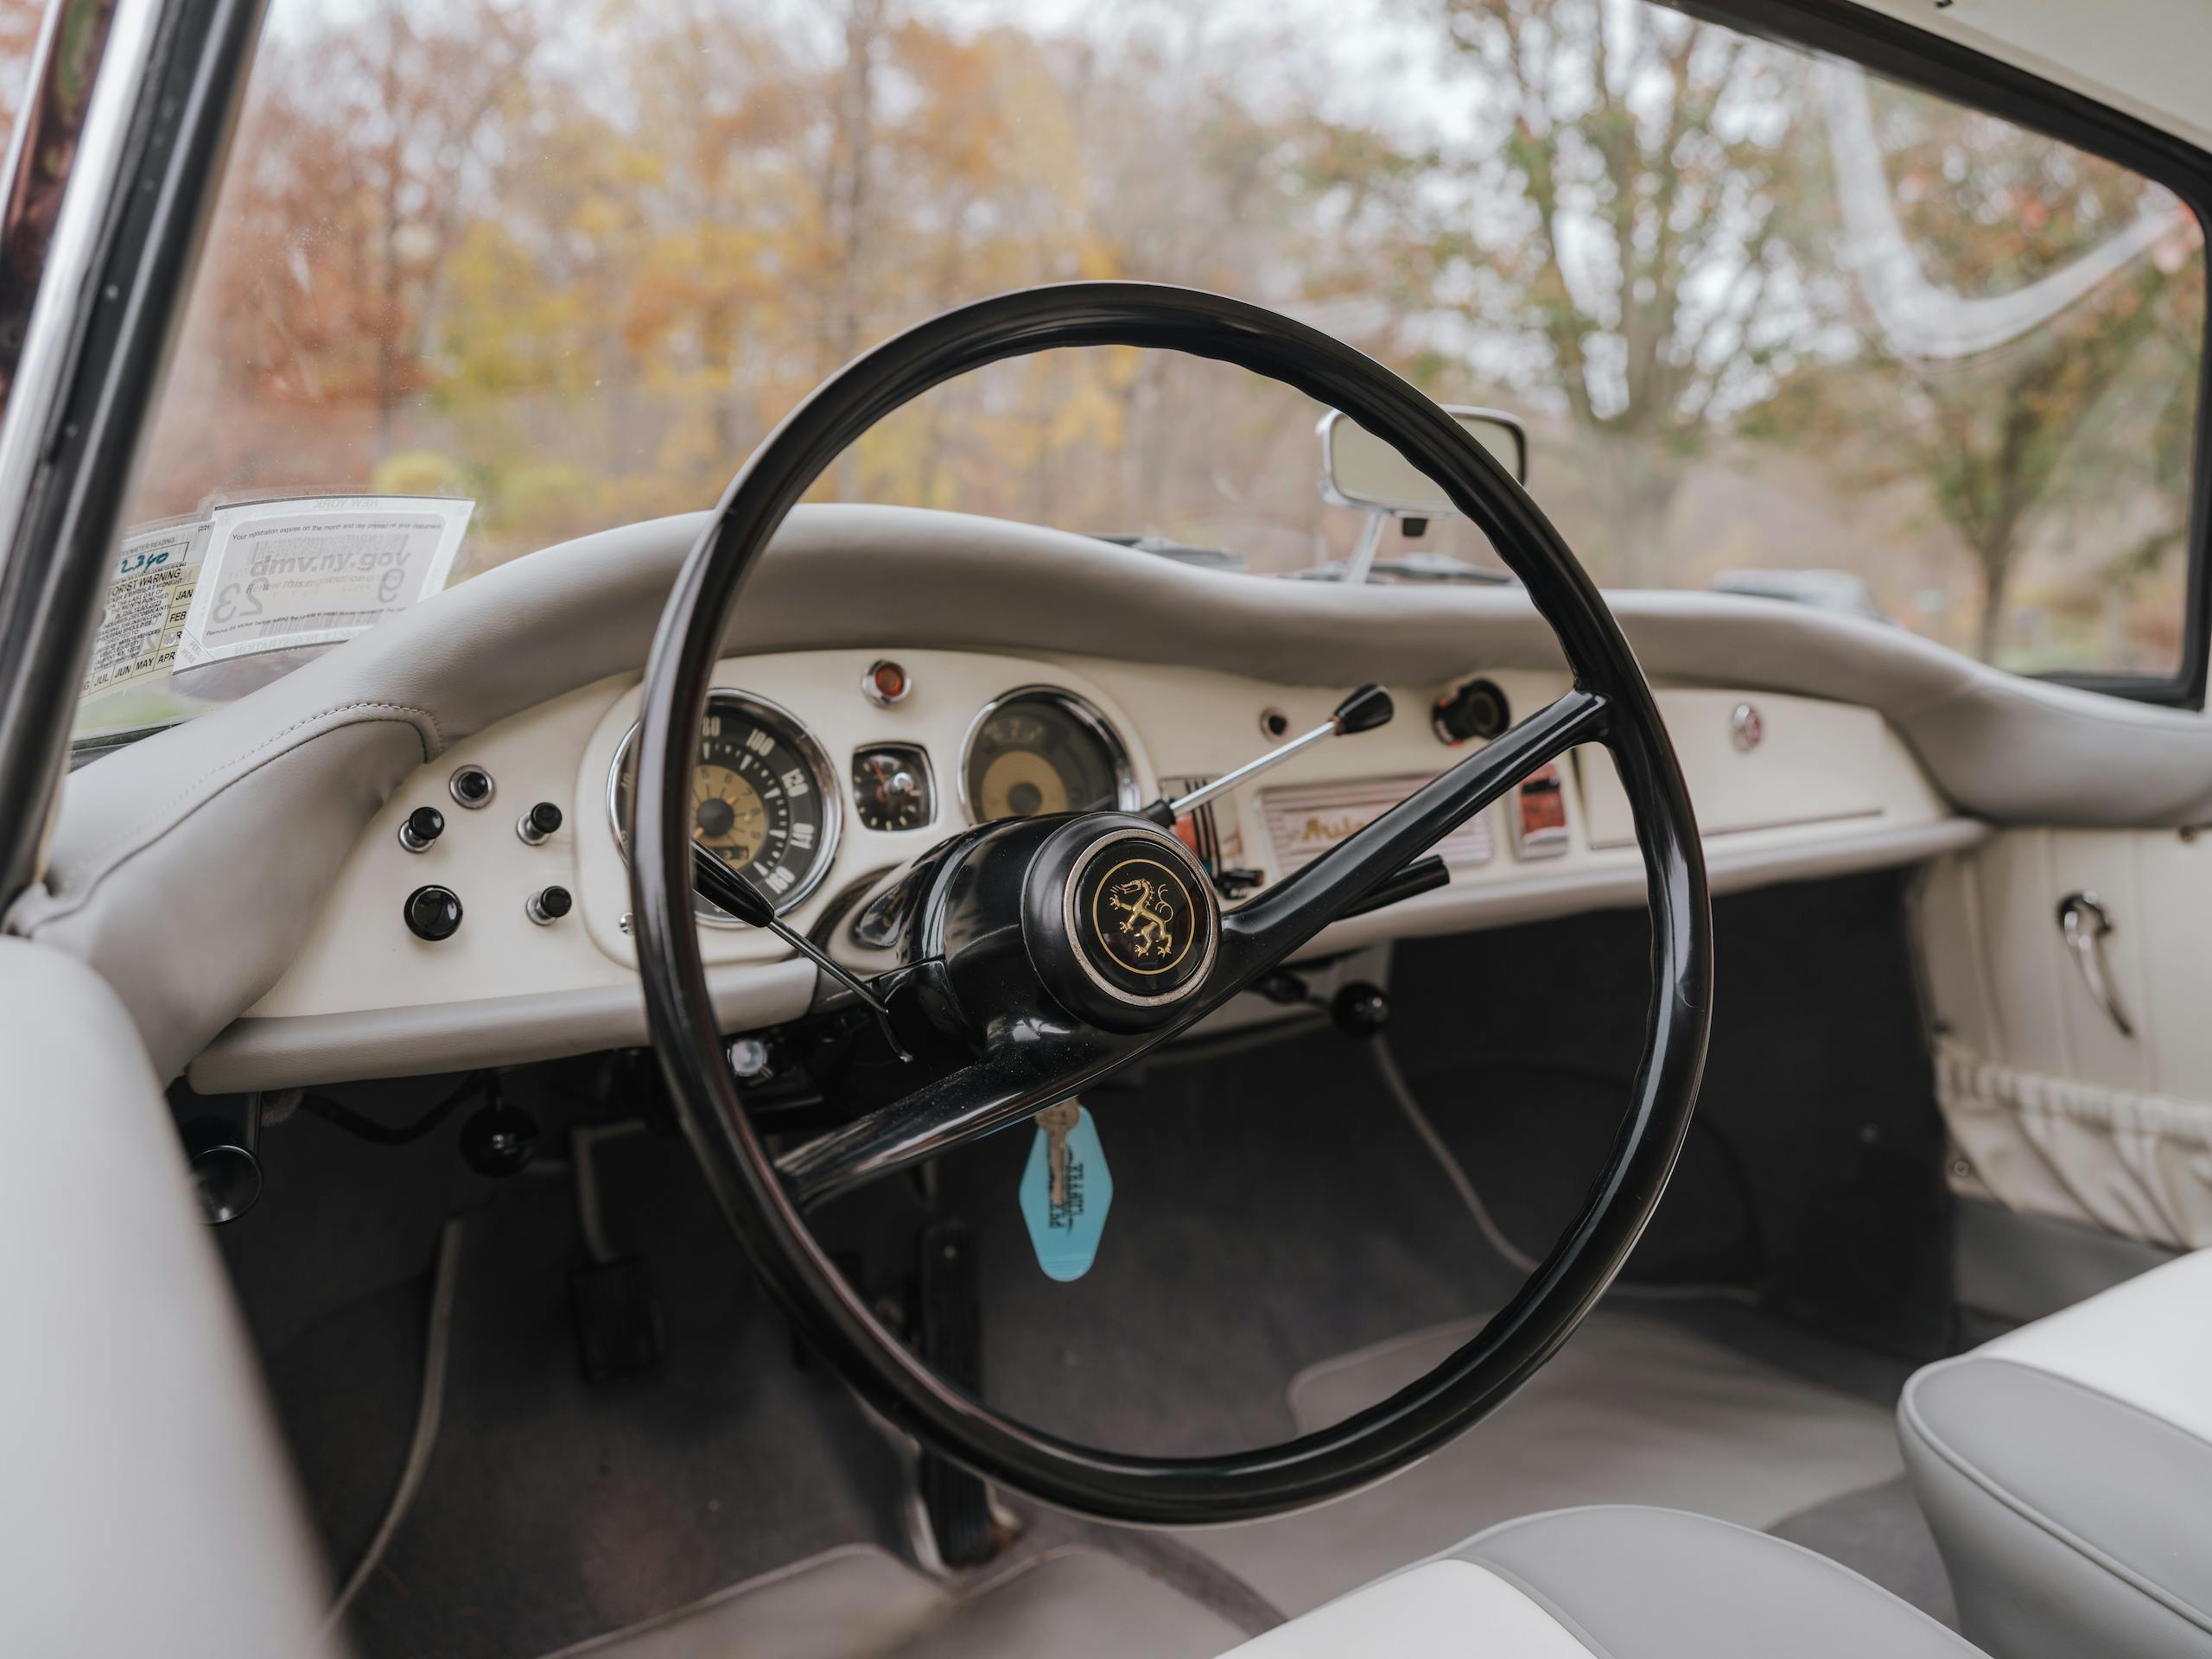 Dinuzzo Auto Union interior steering wheel